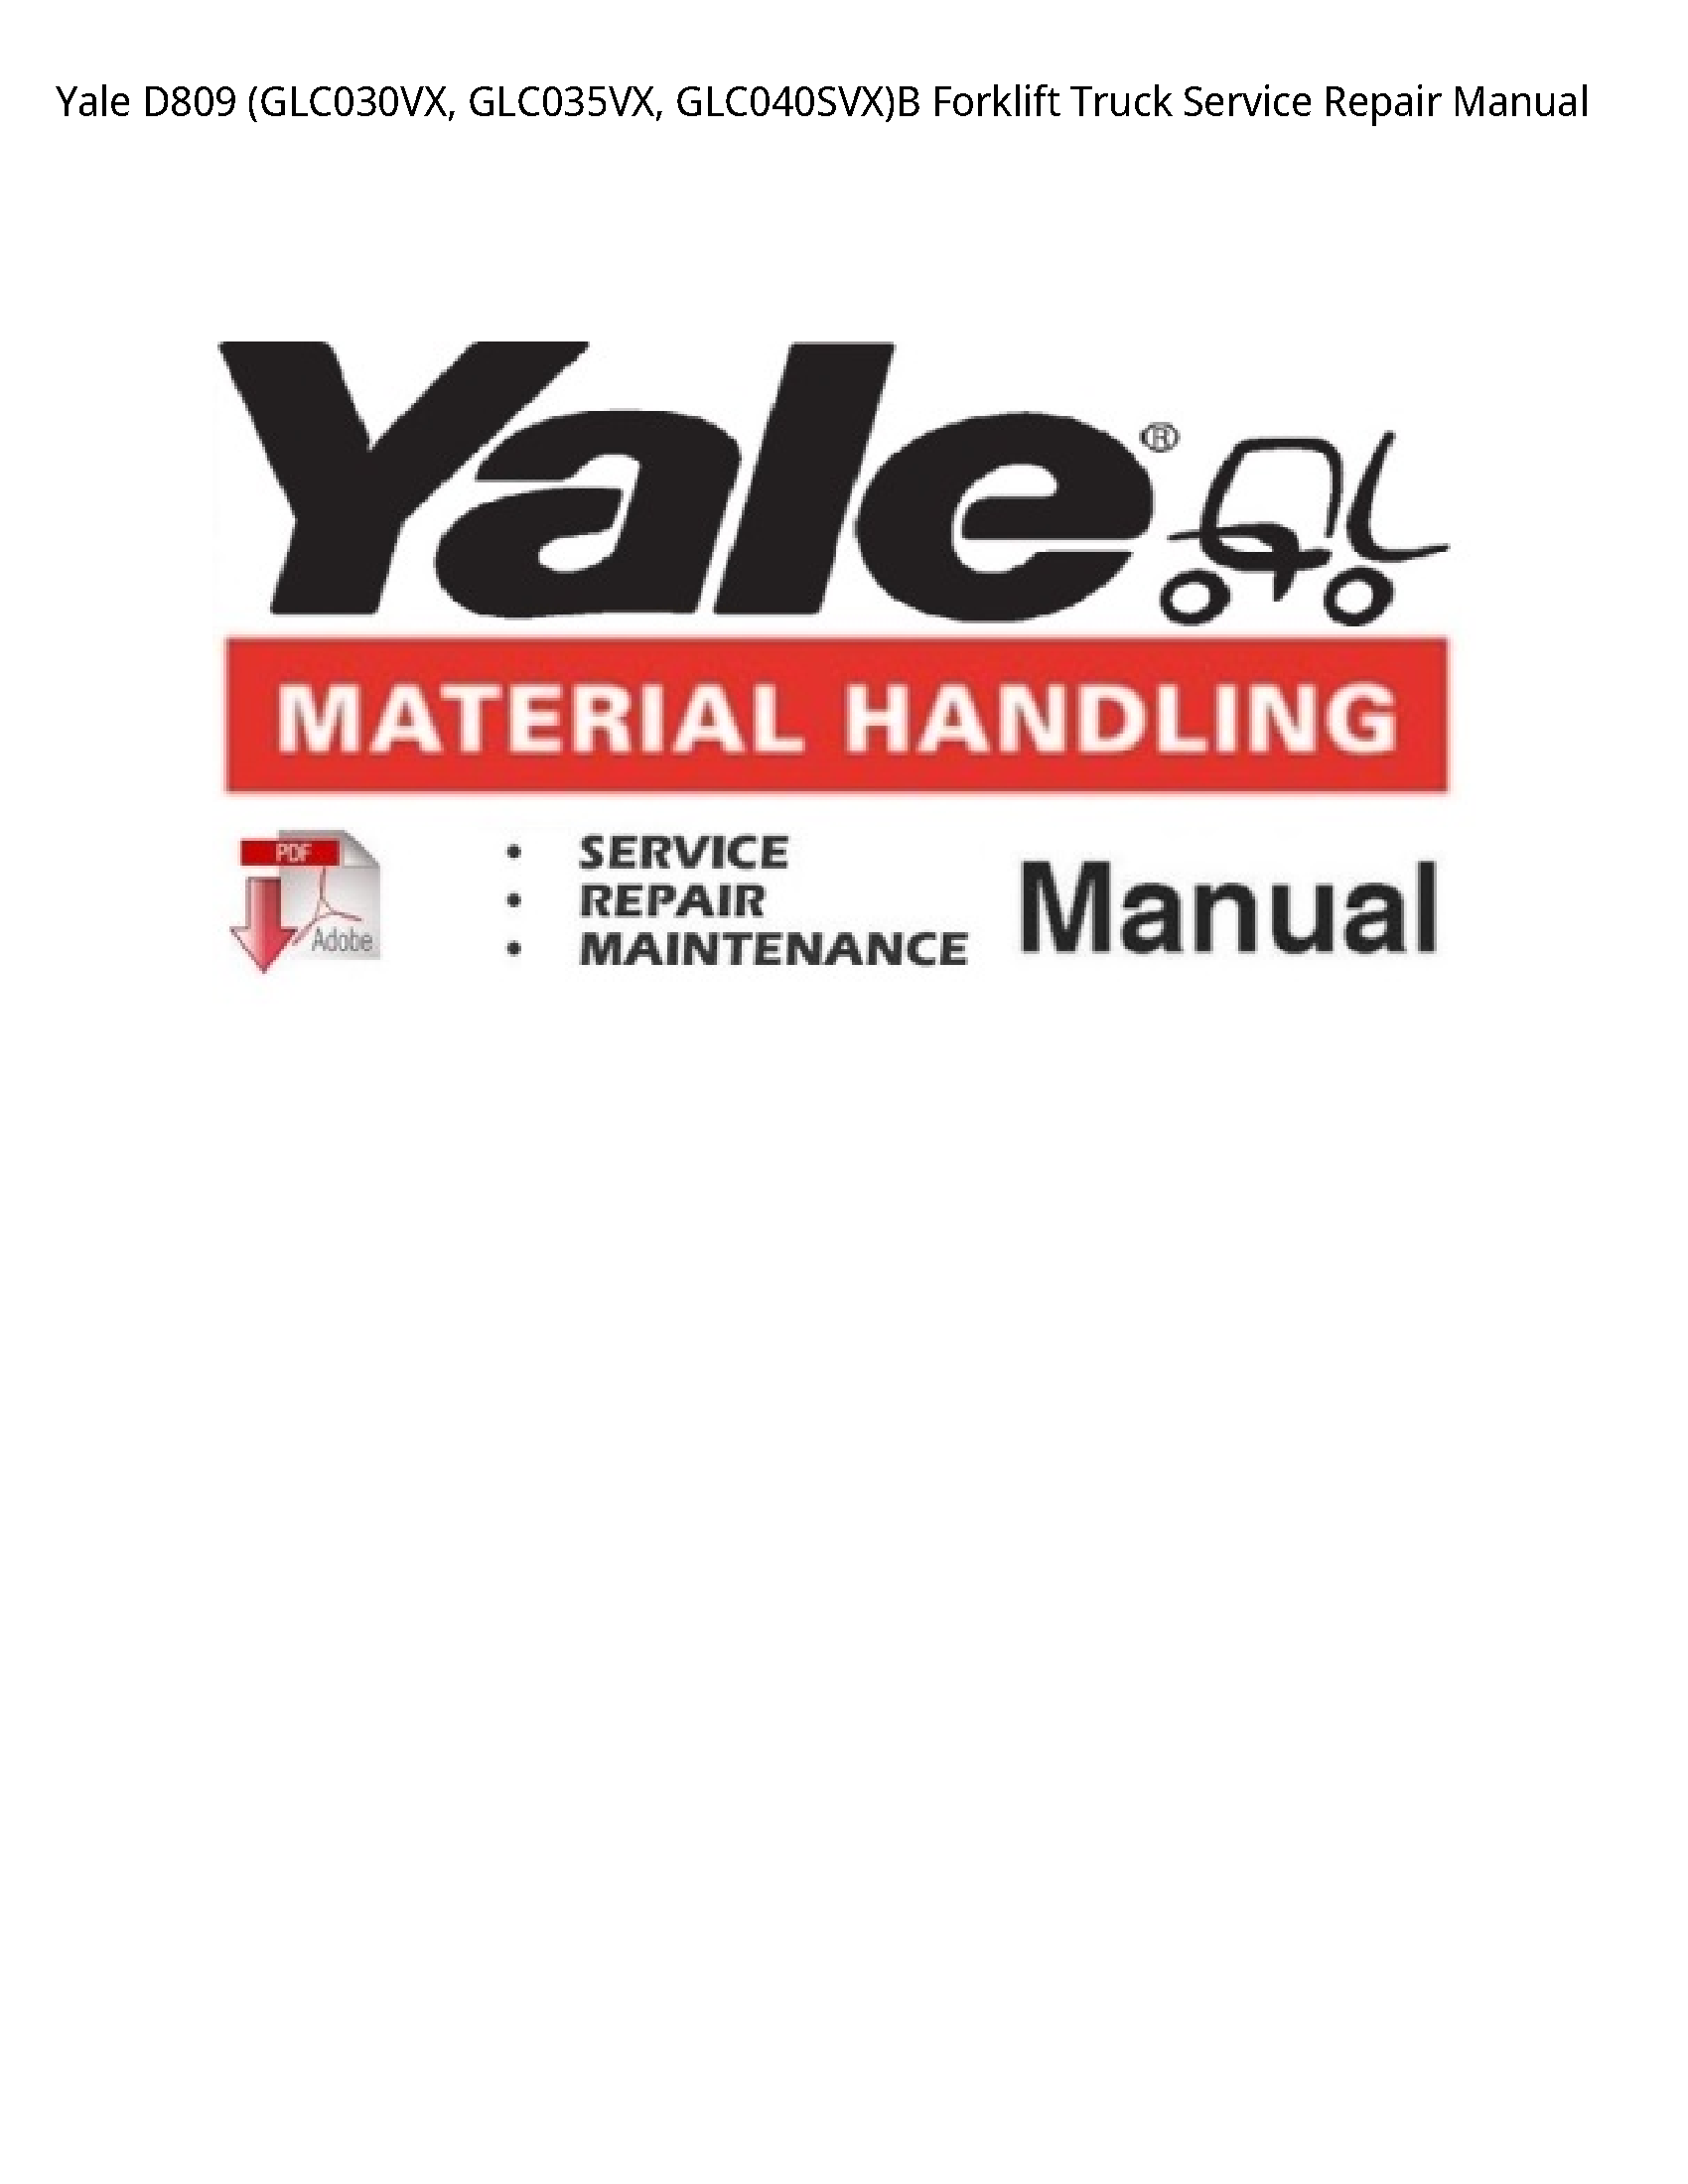 Yale D809 Forklift Truck manual